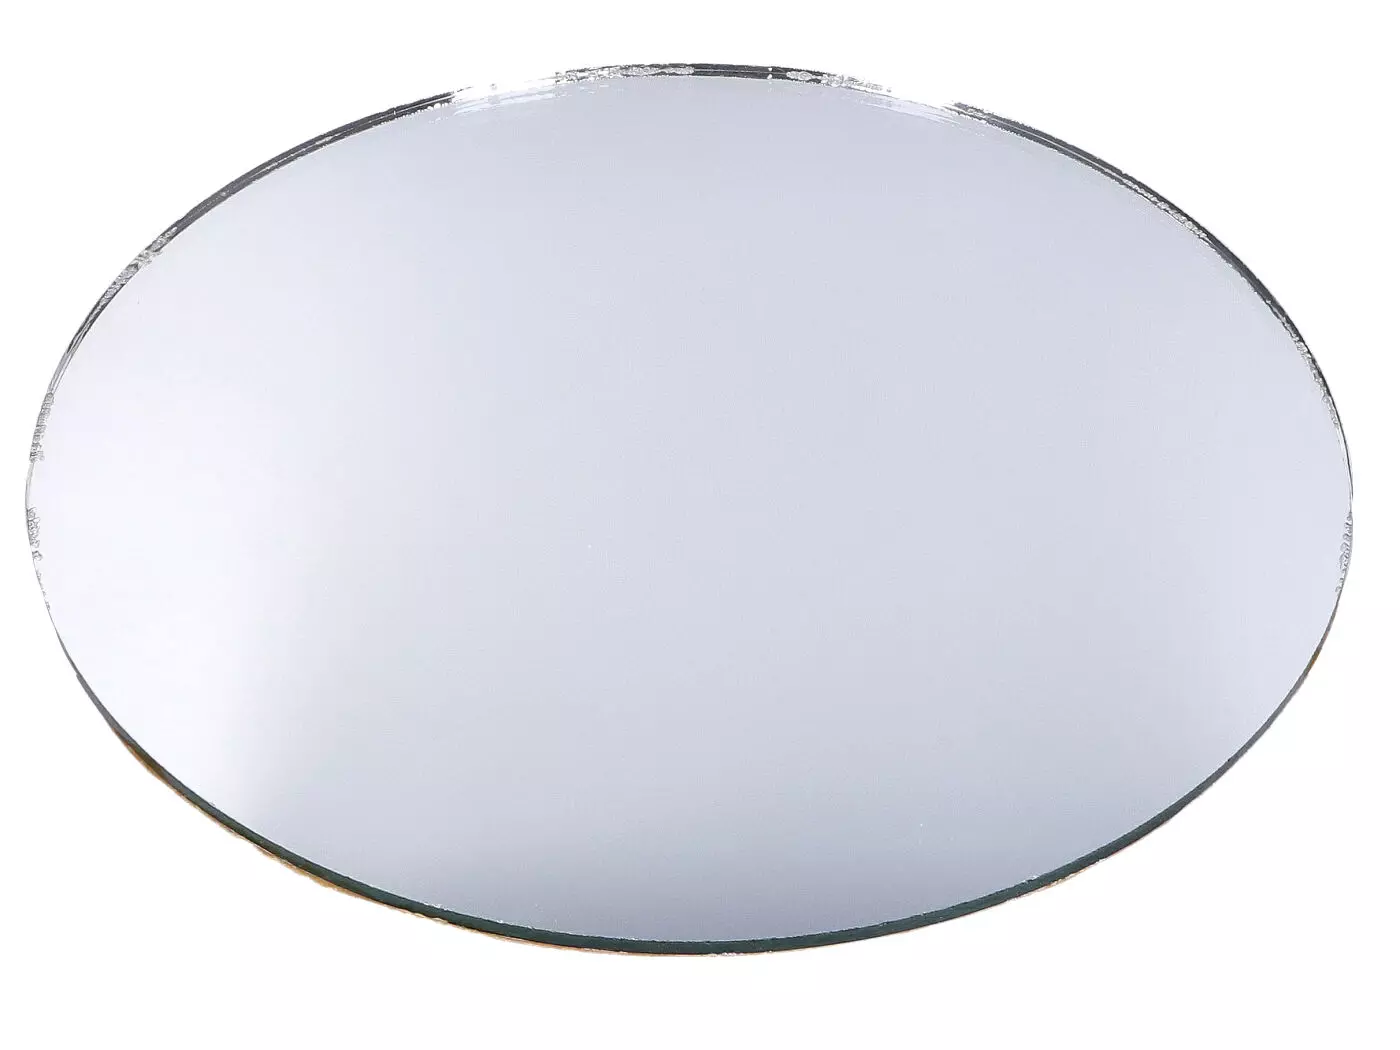 Mirror Glass 122mm Convex For Simson S50, S51, S53, S70, S83, SR50, SR80, KR51/1, KR51/2, SR4-1, SR4-2, SR4-3, SR4-4